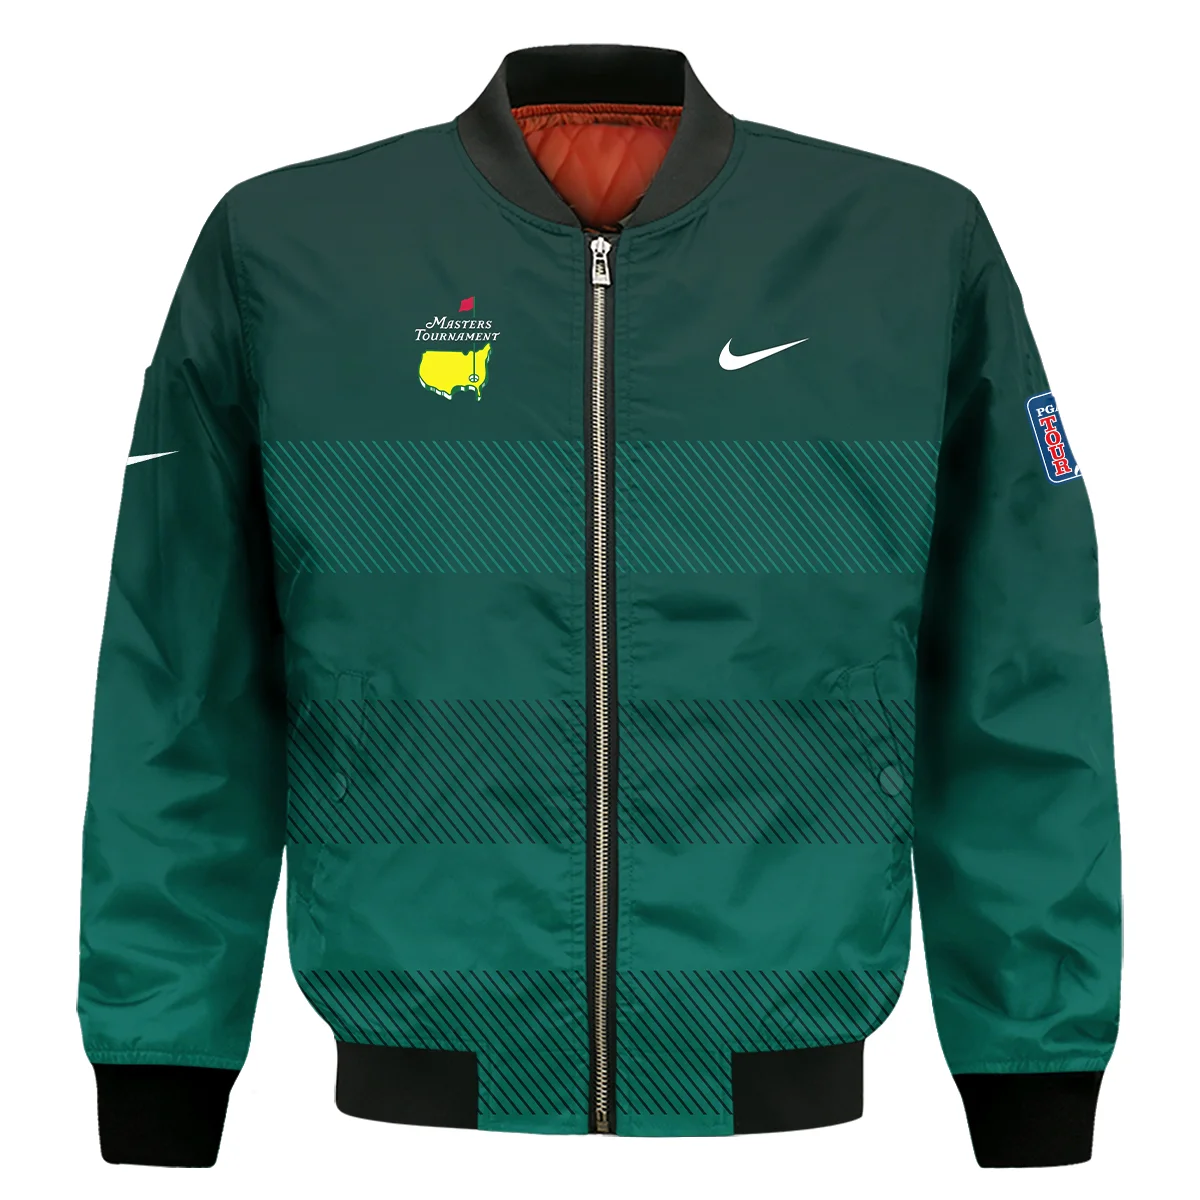 Nike Masters Tournament Dark Green Gradient Stripes Pattern Golf Sport Bomber Jacket Style Classic Bomber Jacket